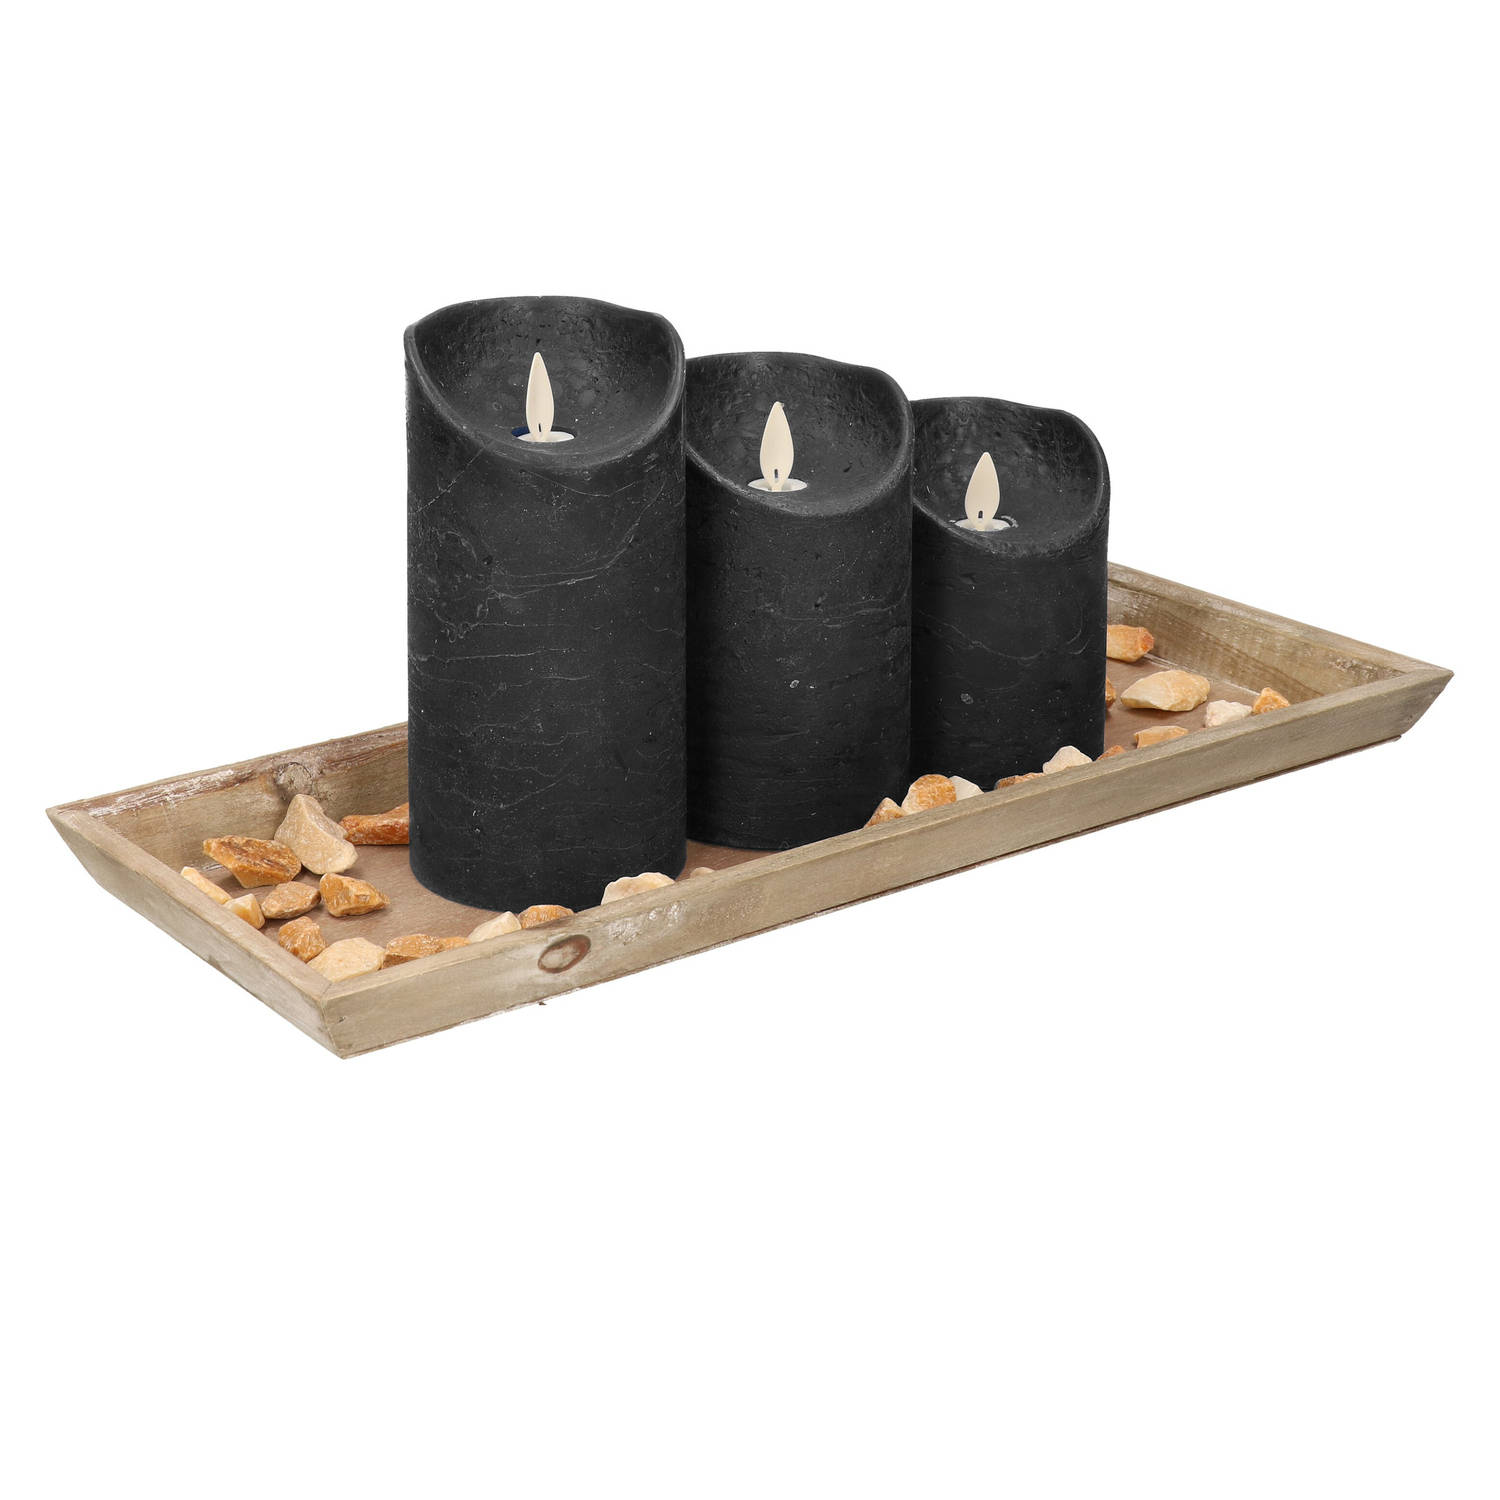 Dienblad Van Hout Met 3 Led Kaarsen In De Kleur Zwart 39 X 15 Cm Led Kaarsen